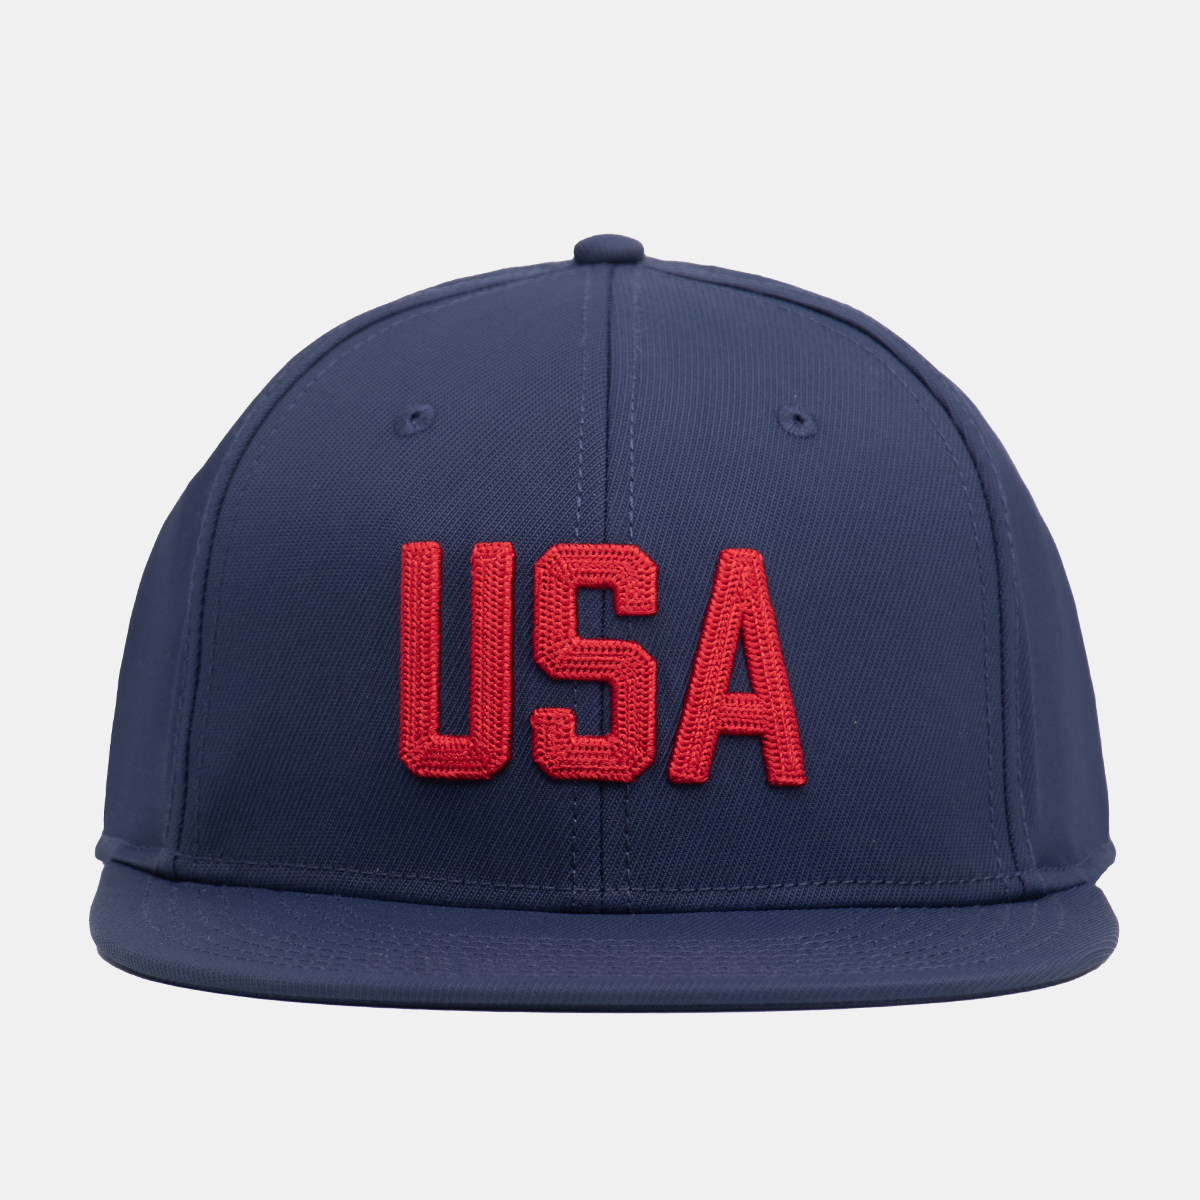 USA Stretch Hat